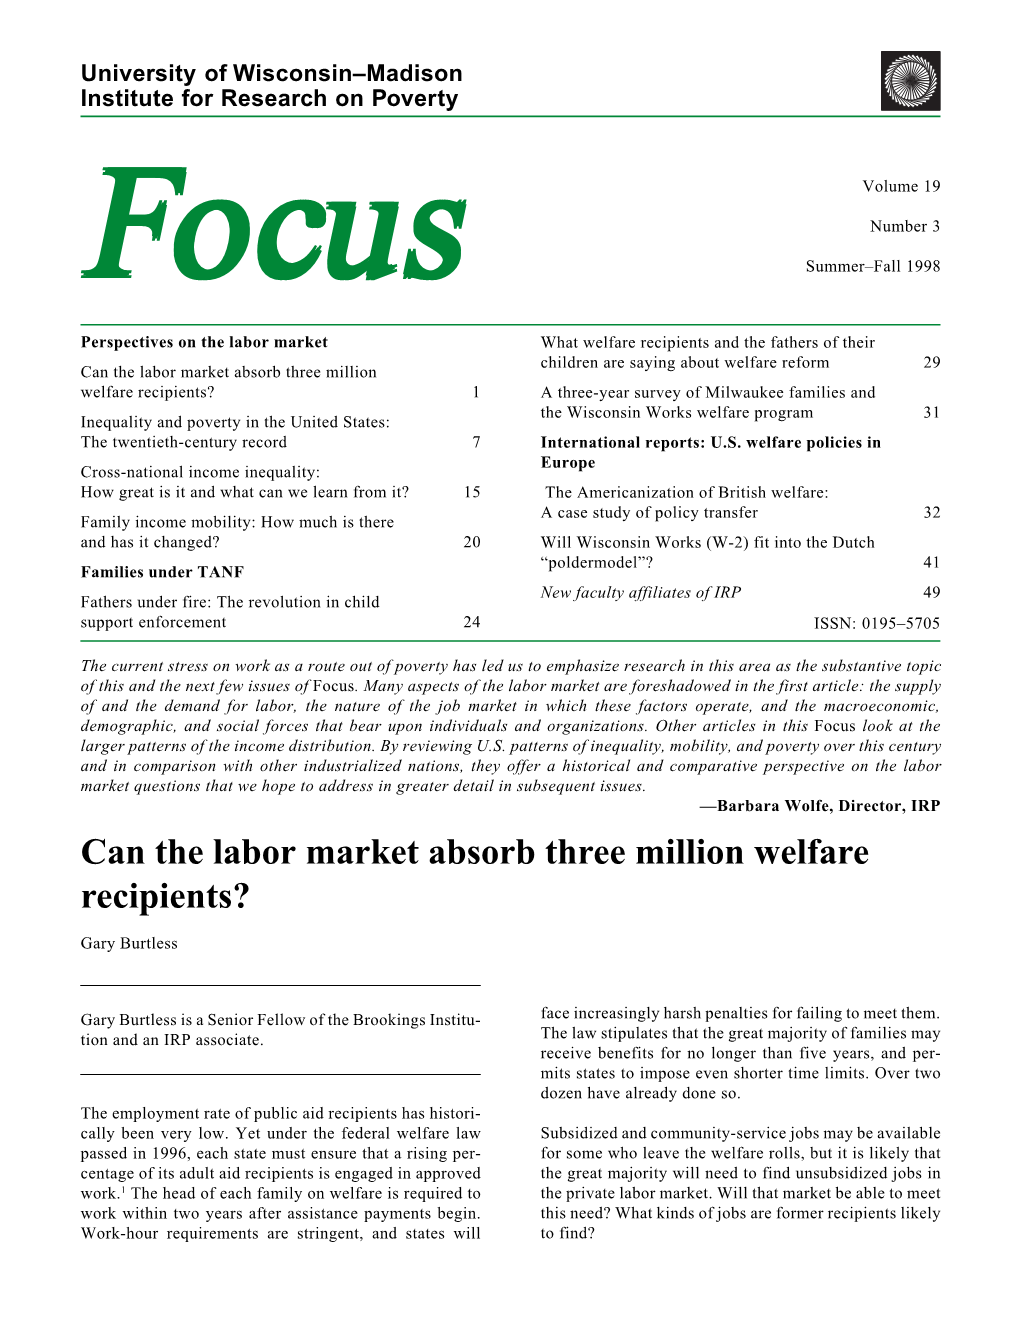 Can the Labor Market Absorb Three Million Welfare Recipients?